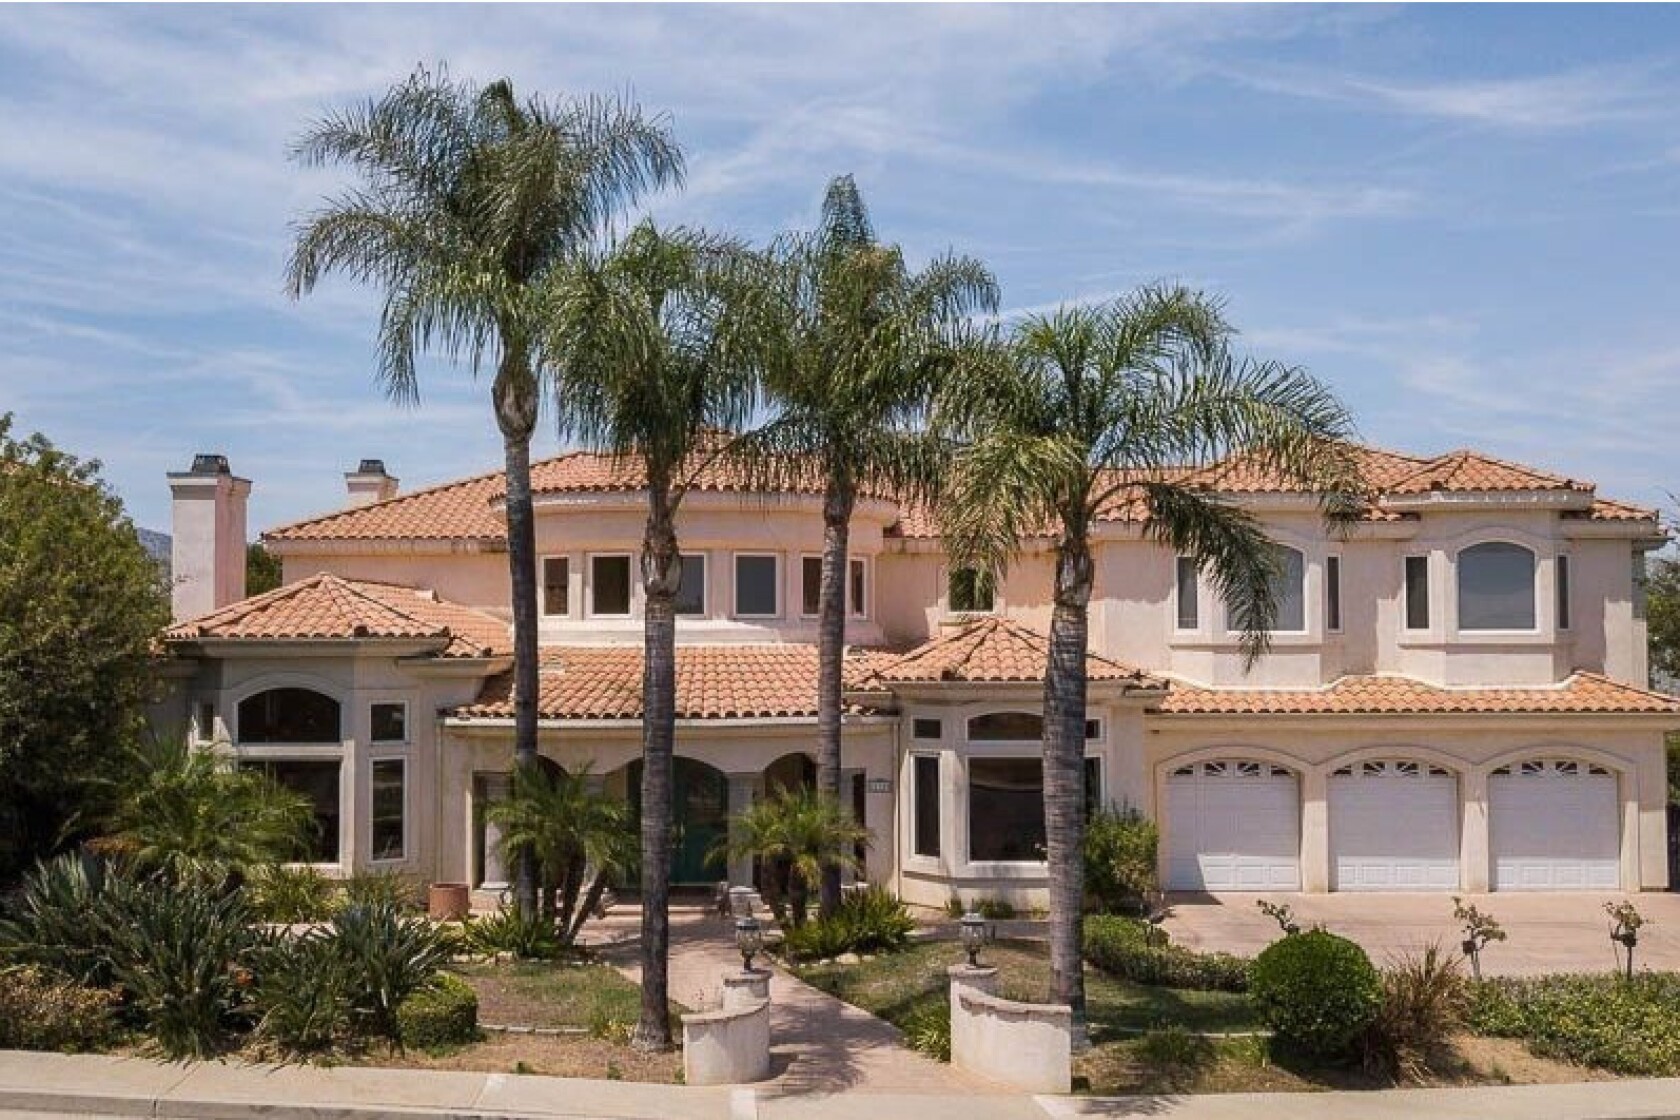 Casa en Whittier, California, United States